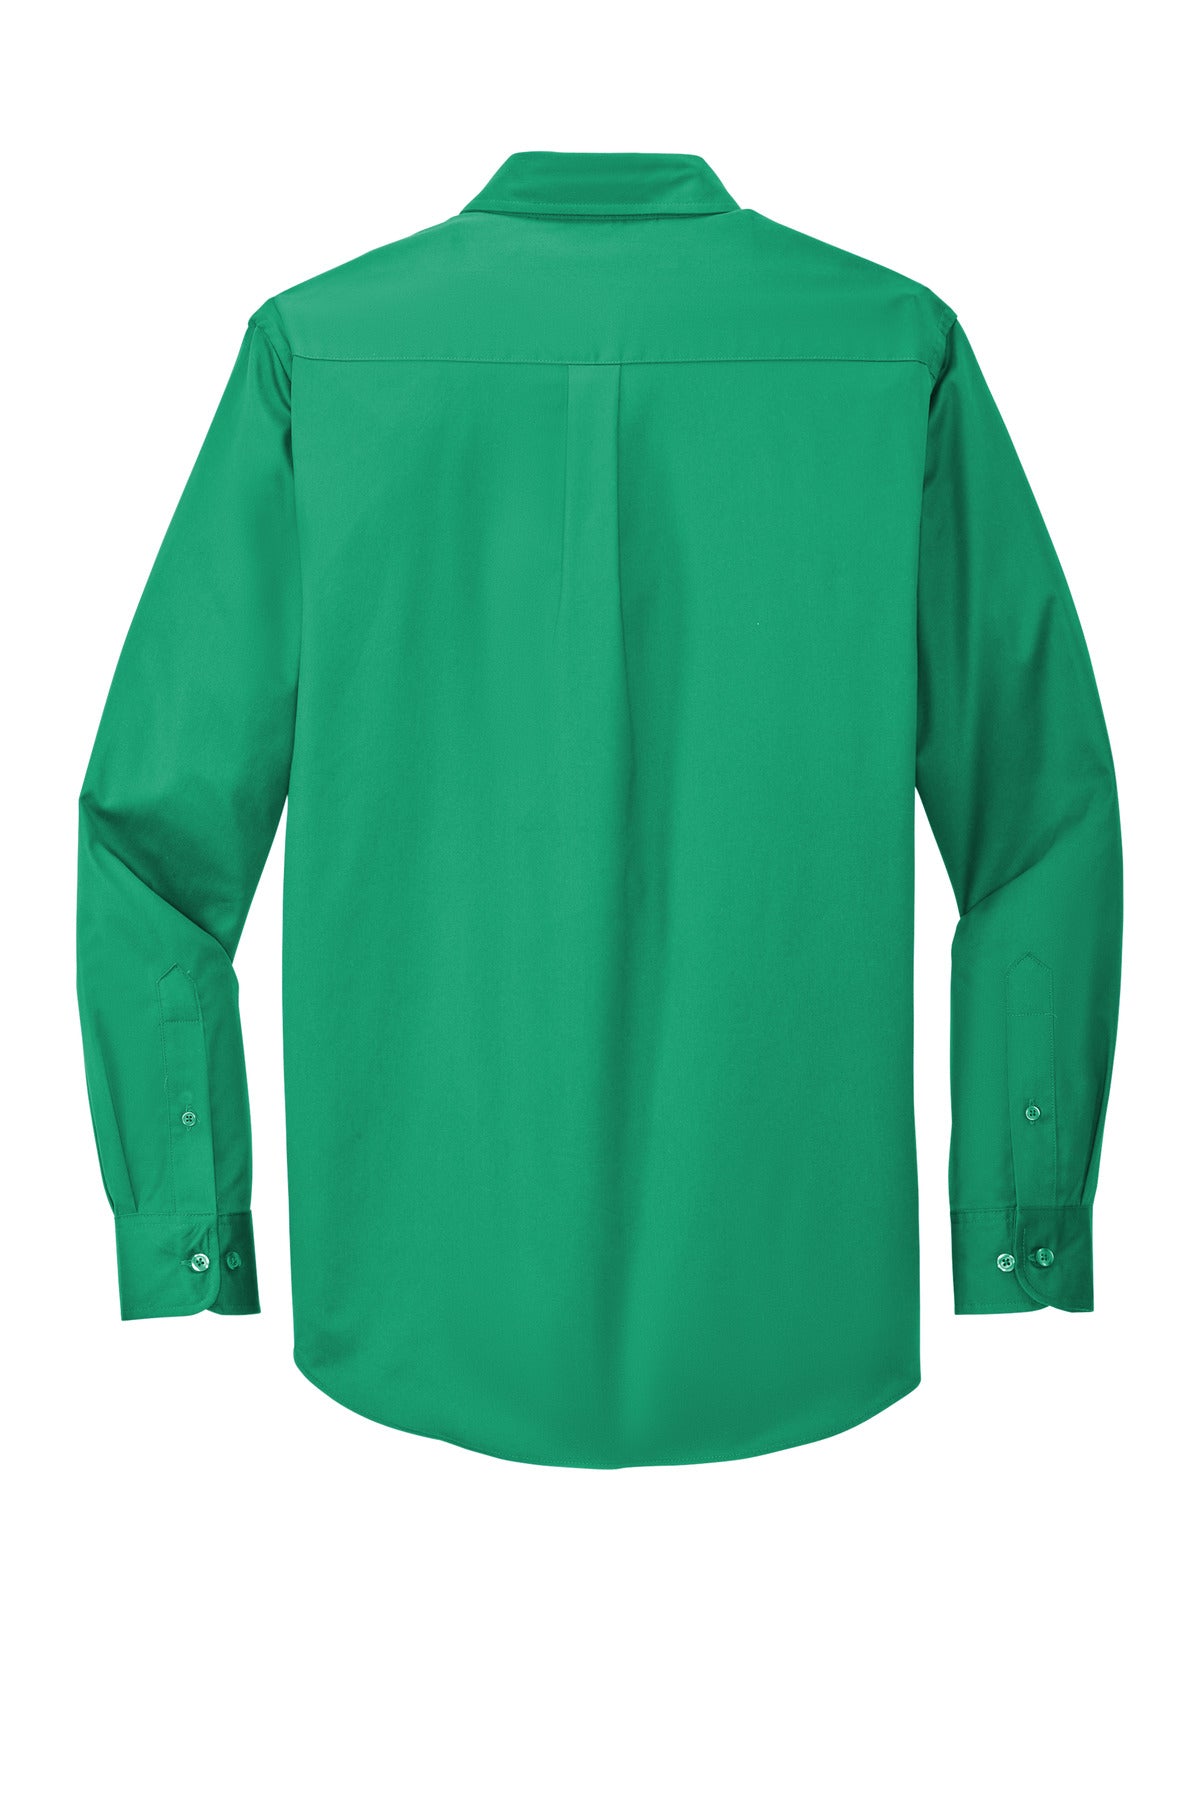 Port Authority Tall Long Sleeve Easy Care Shirt. TLS608